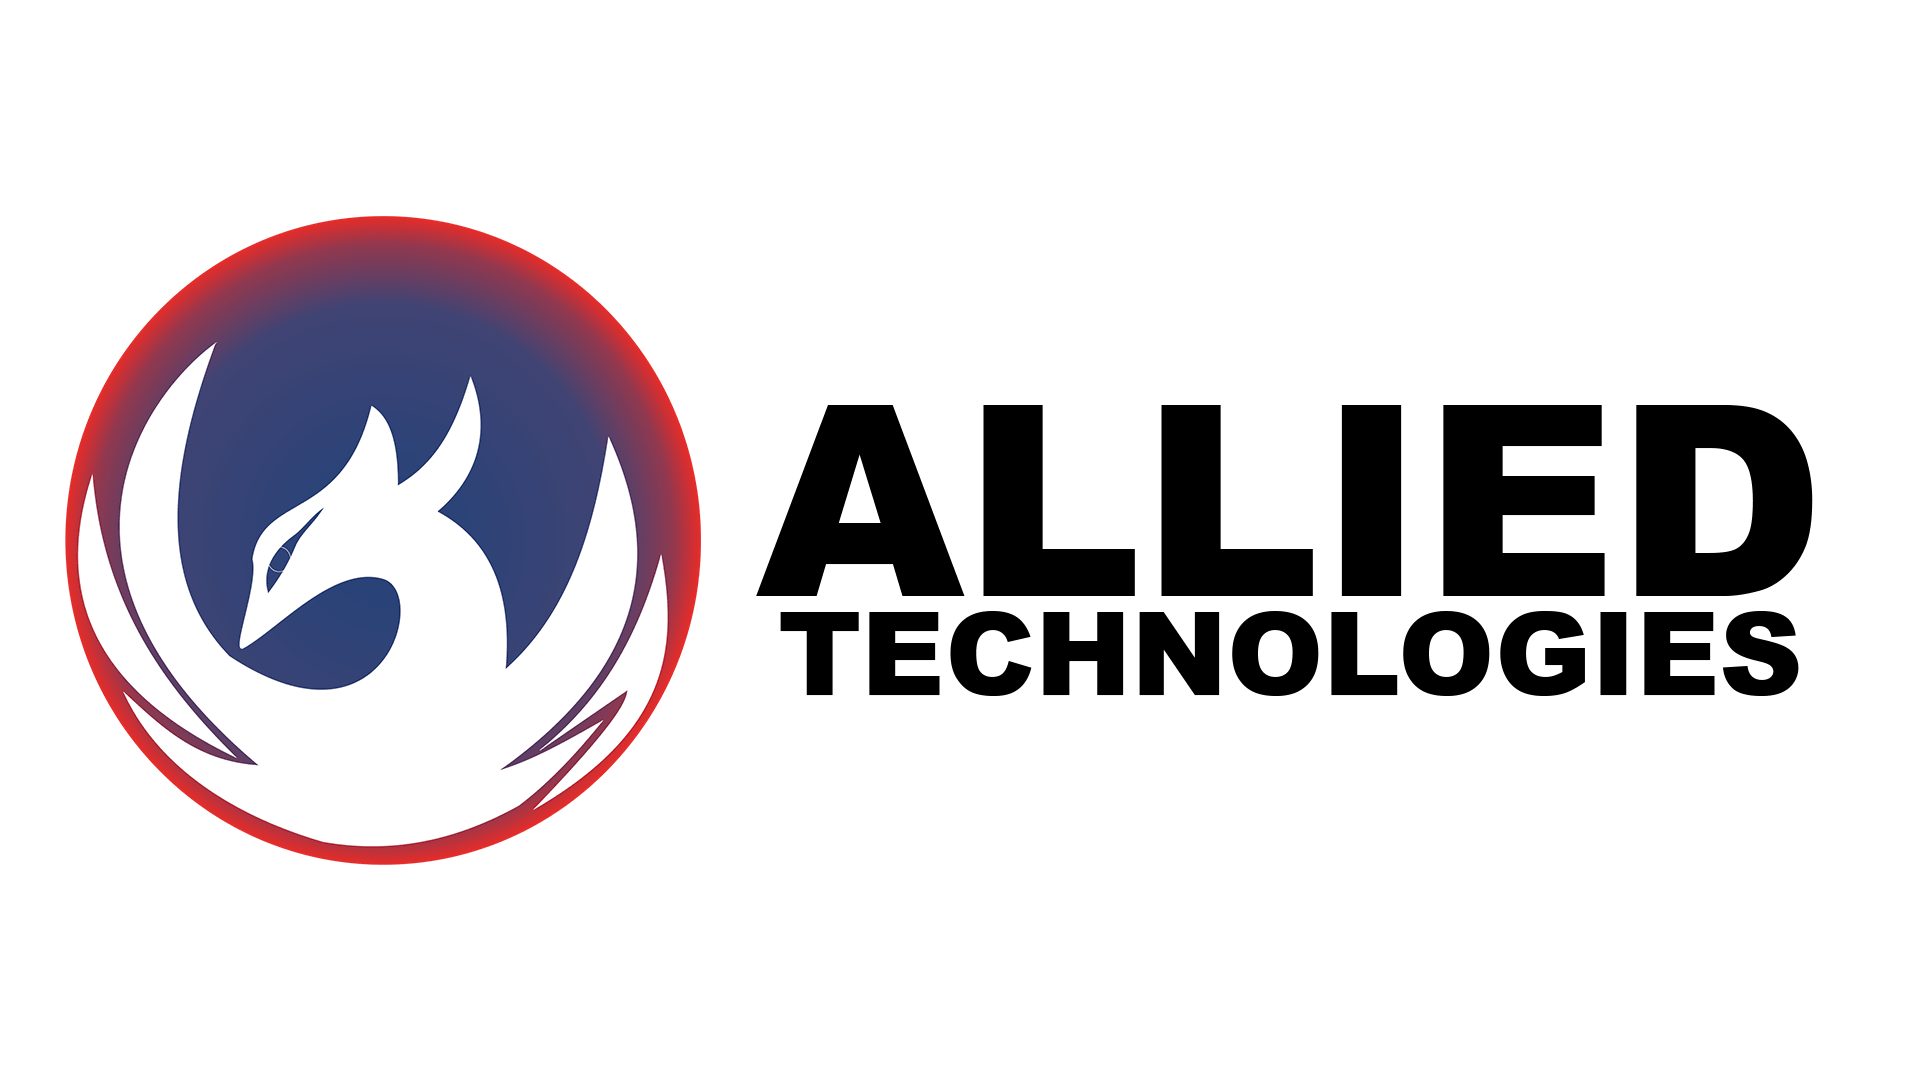 Allied Technologies in Elioplus